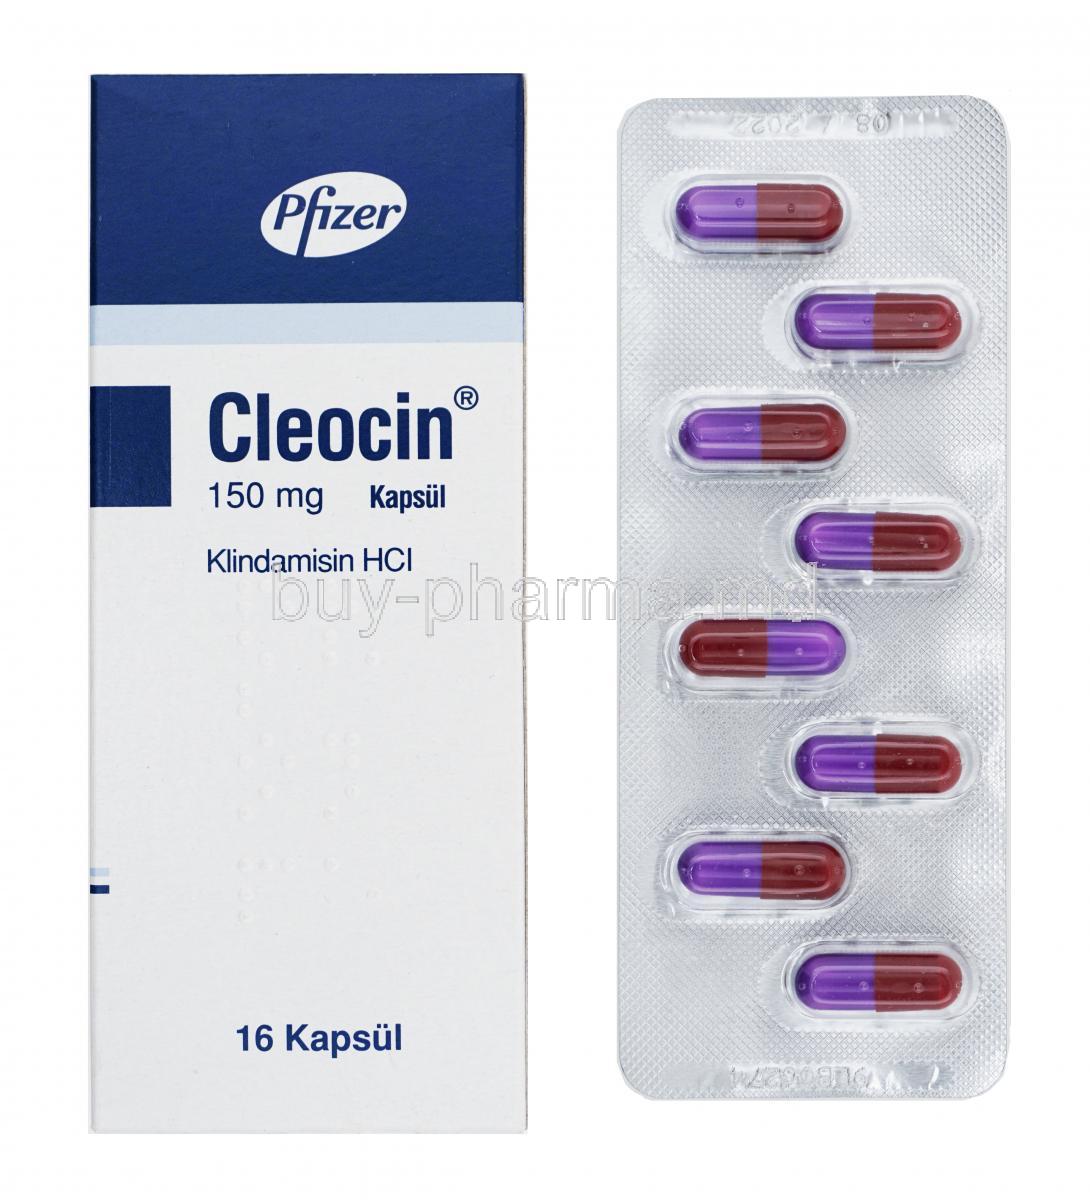 Cleocin, Clindamycin 150mg box and capsule